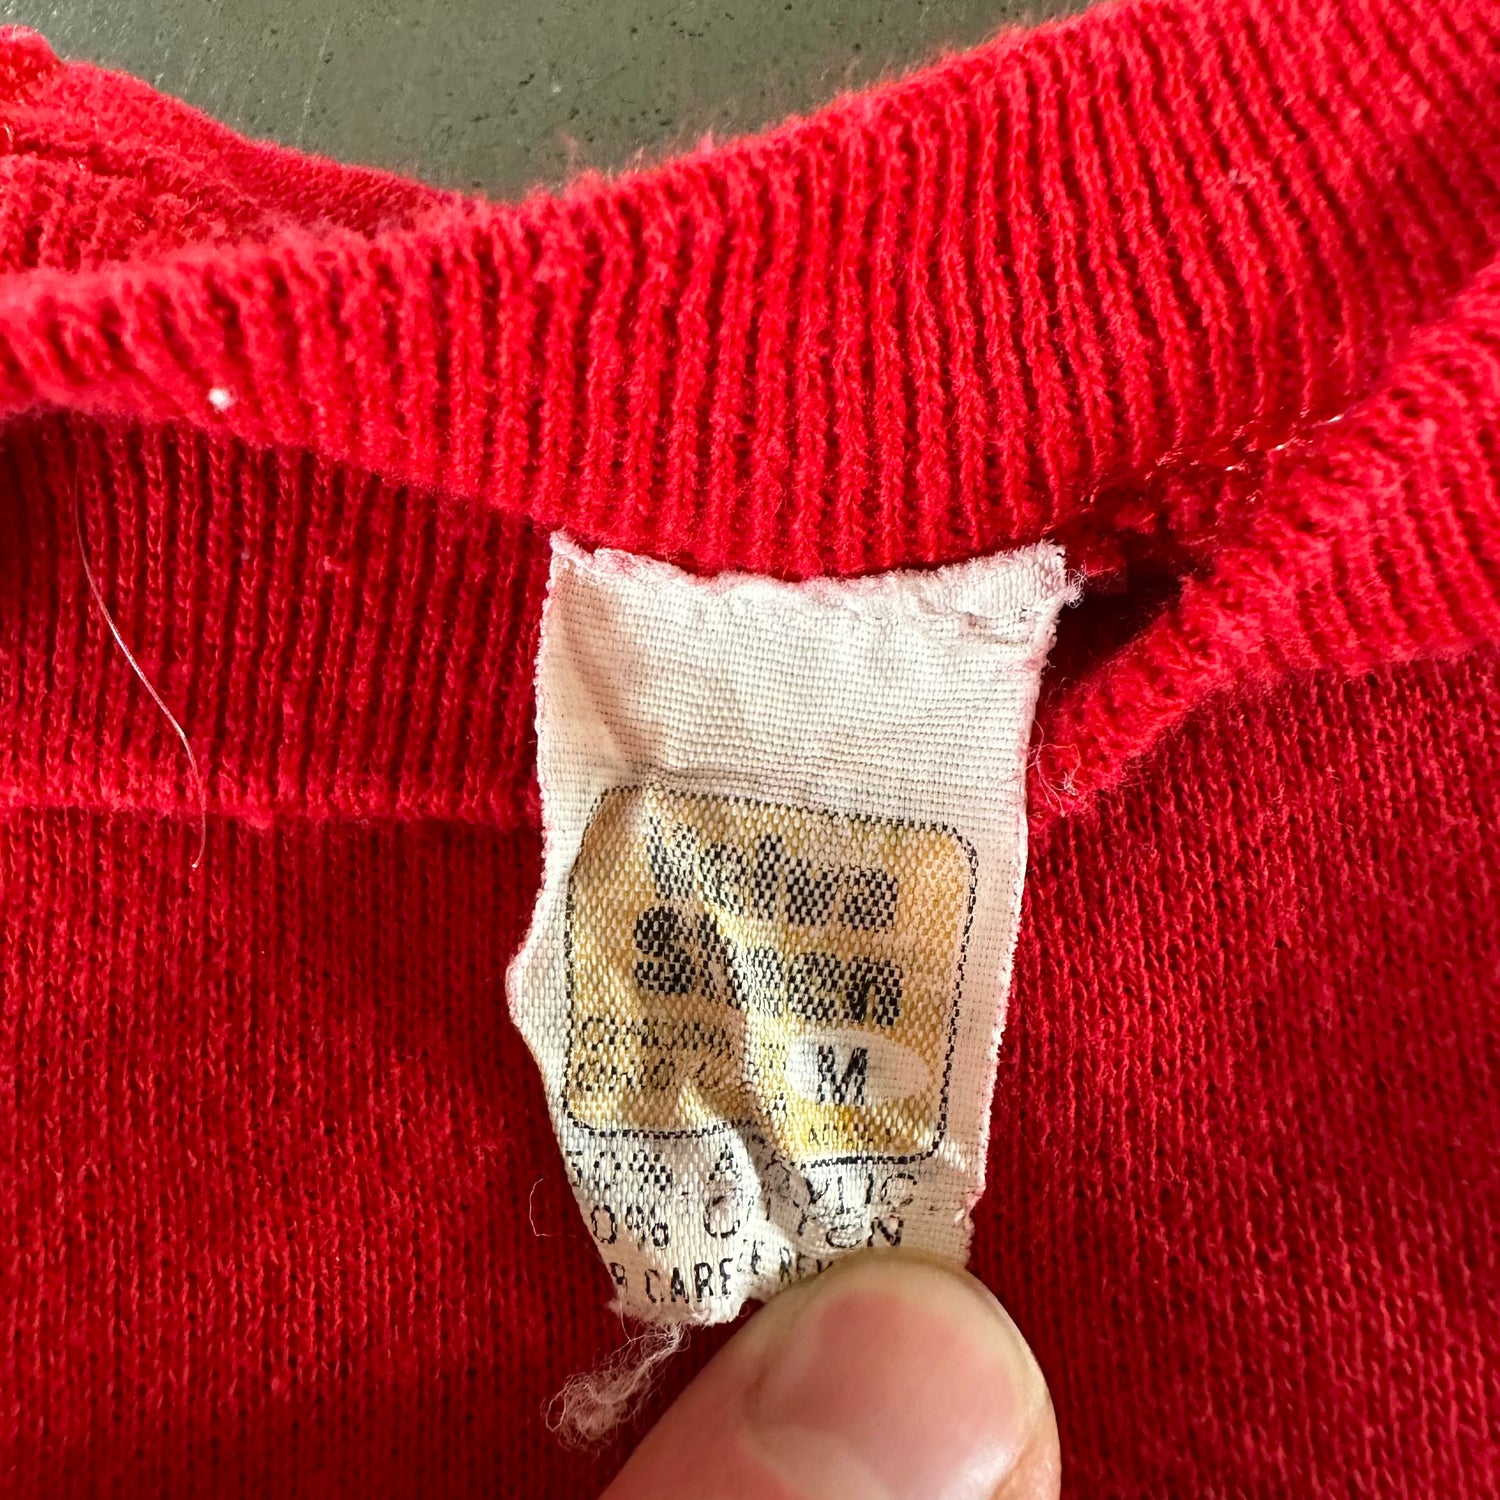 Vintage 1980s Askew Trailblazer Sweatshirt size Medium